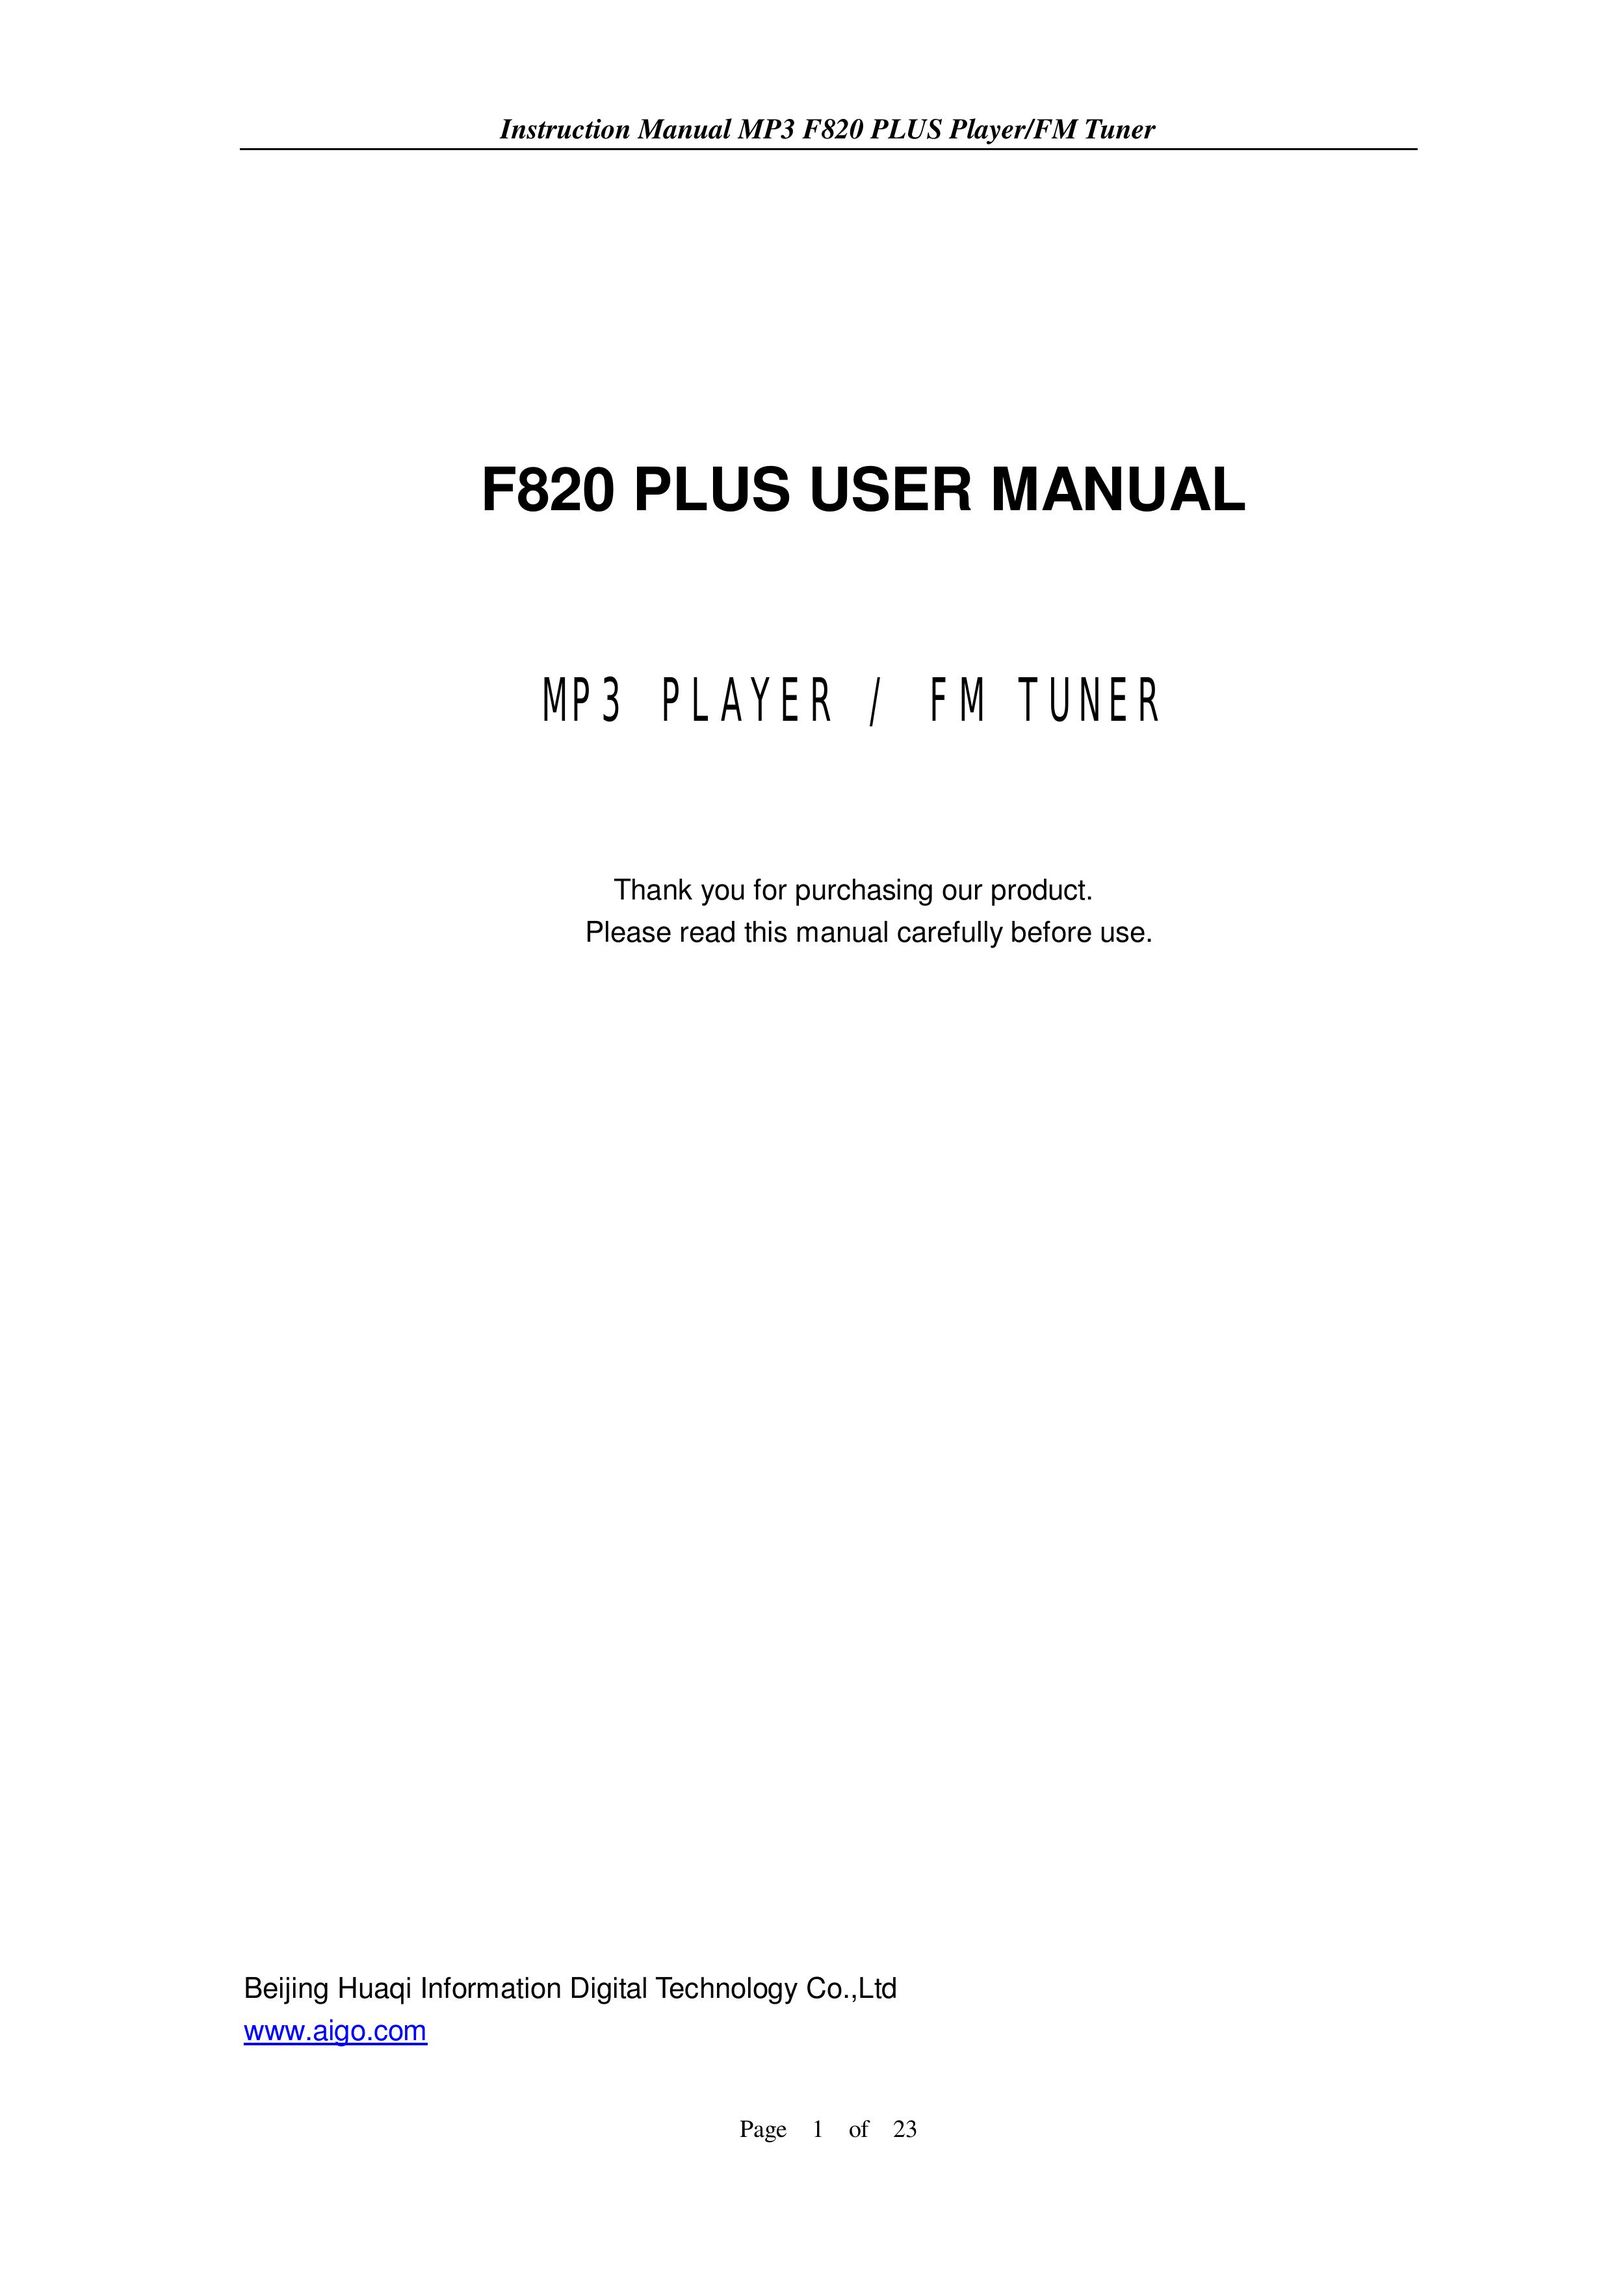 Aigo F820 PLUS MP3 Player User Manual